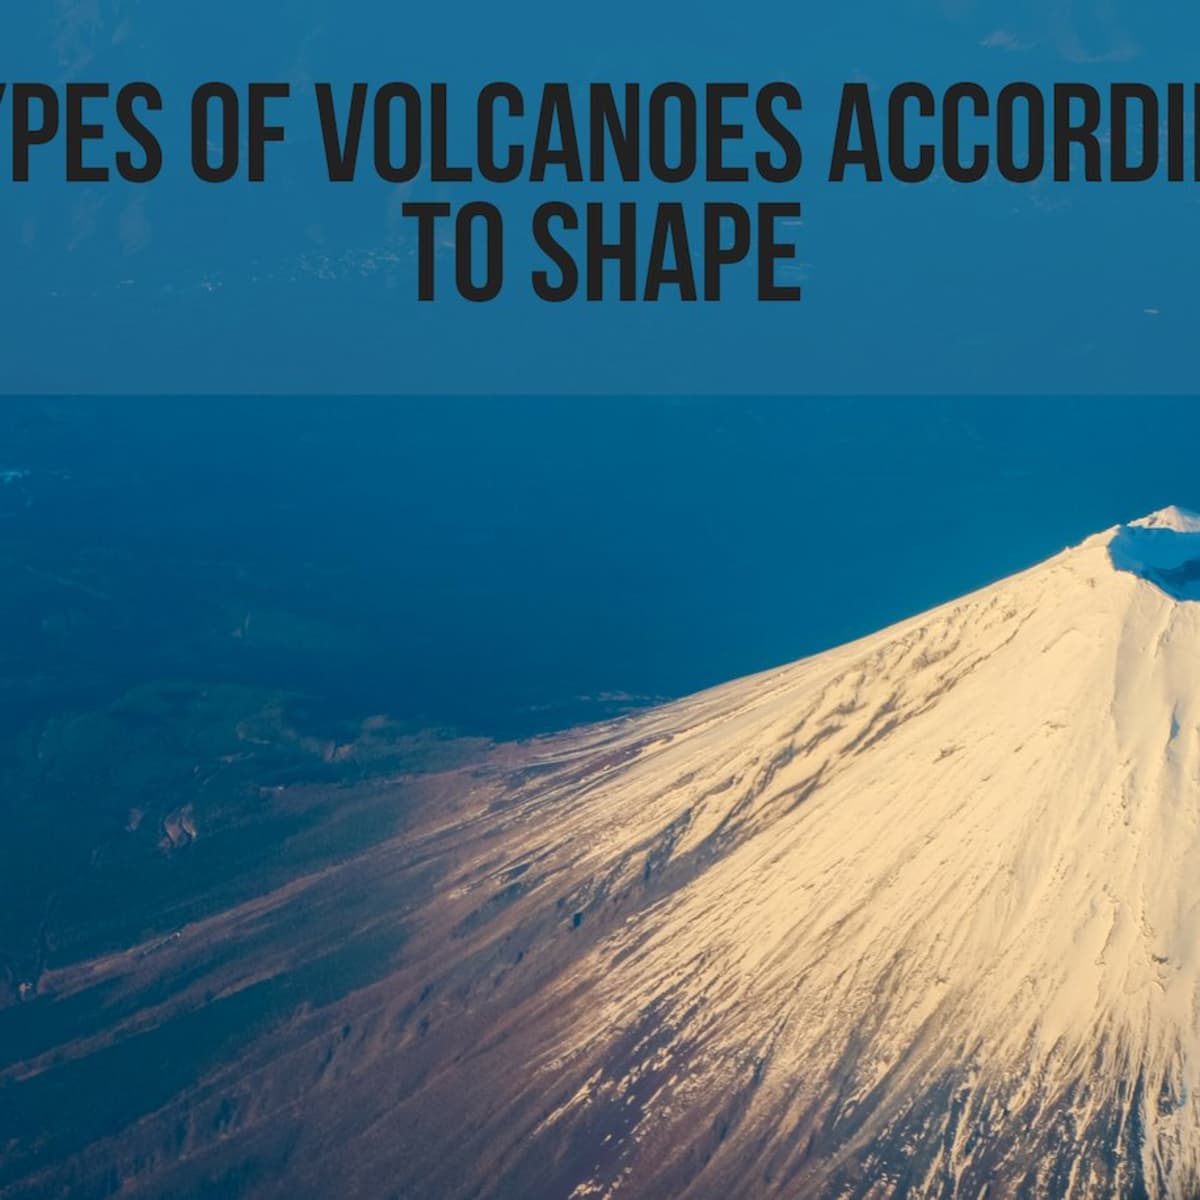 cinder cone volcanoes